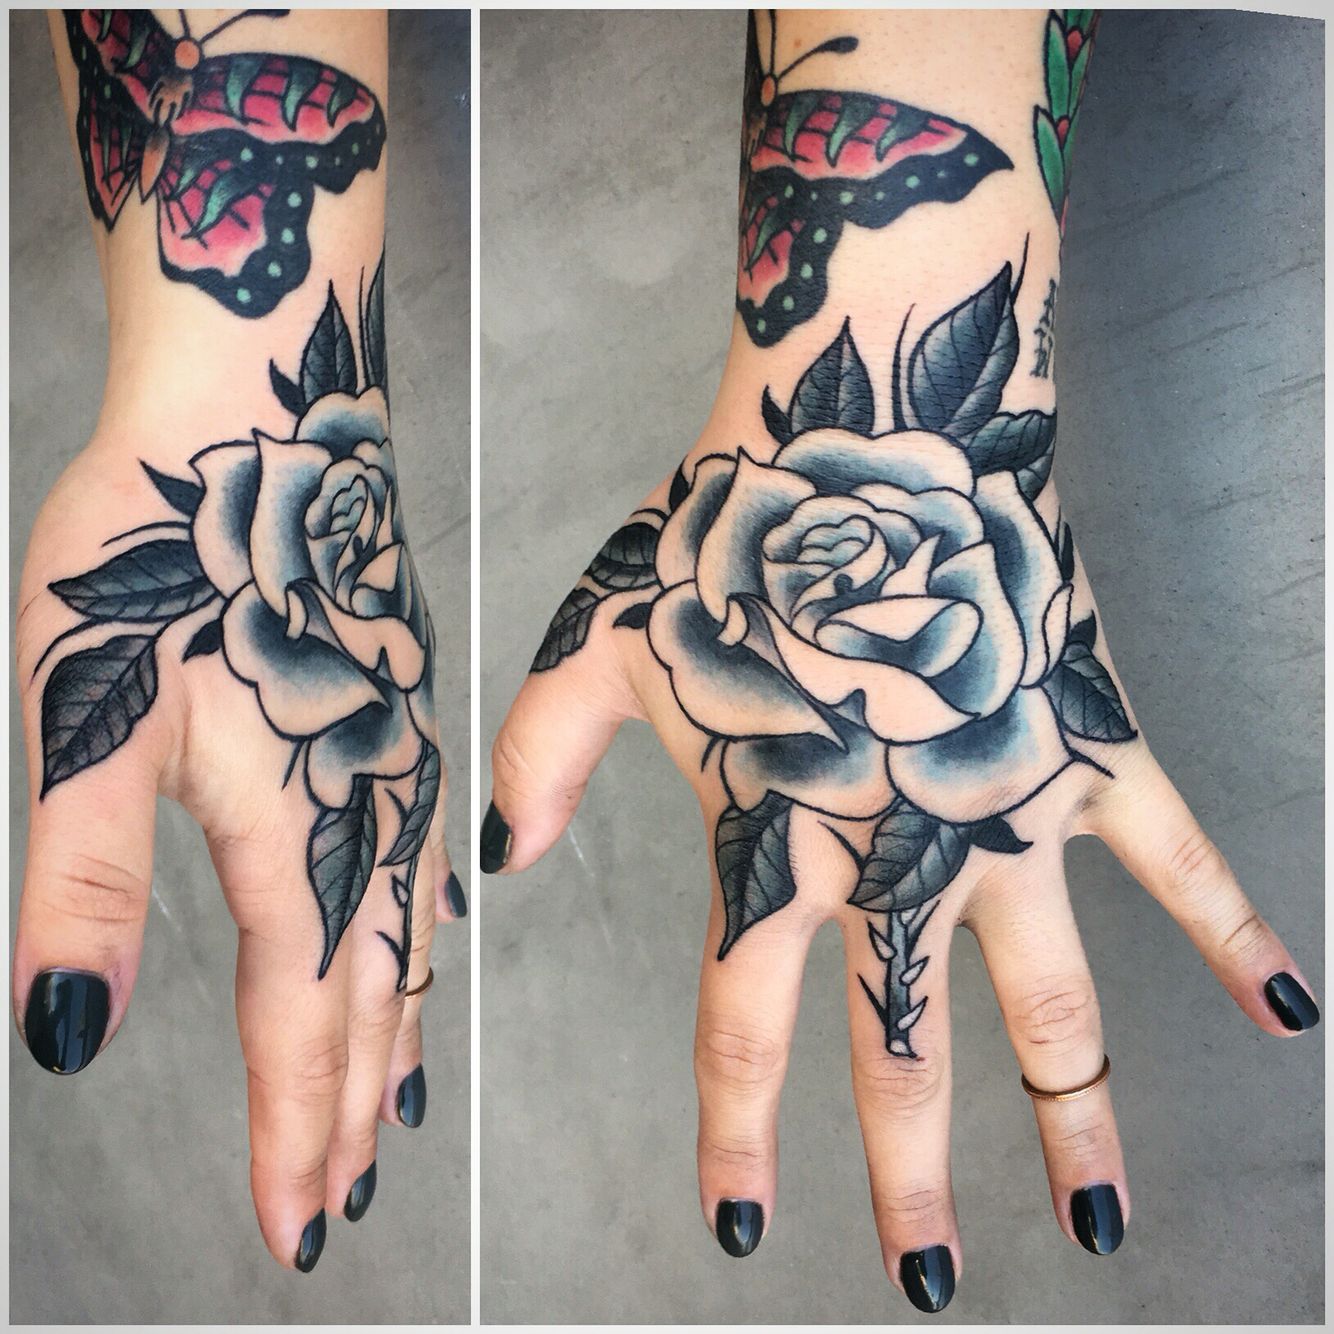 Rose Hand Tattoo, Rose Tattoo On Hand Girl